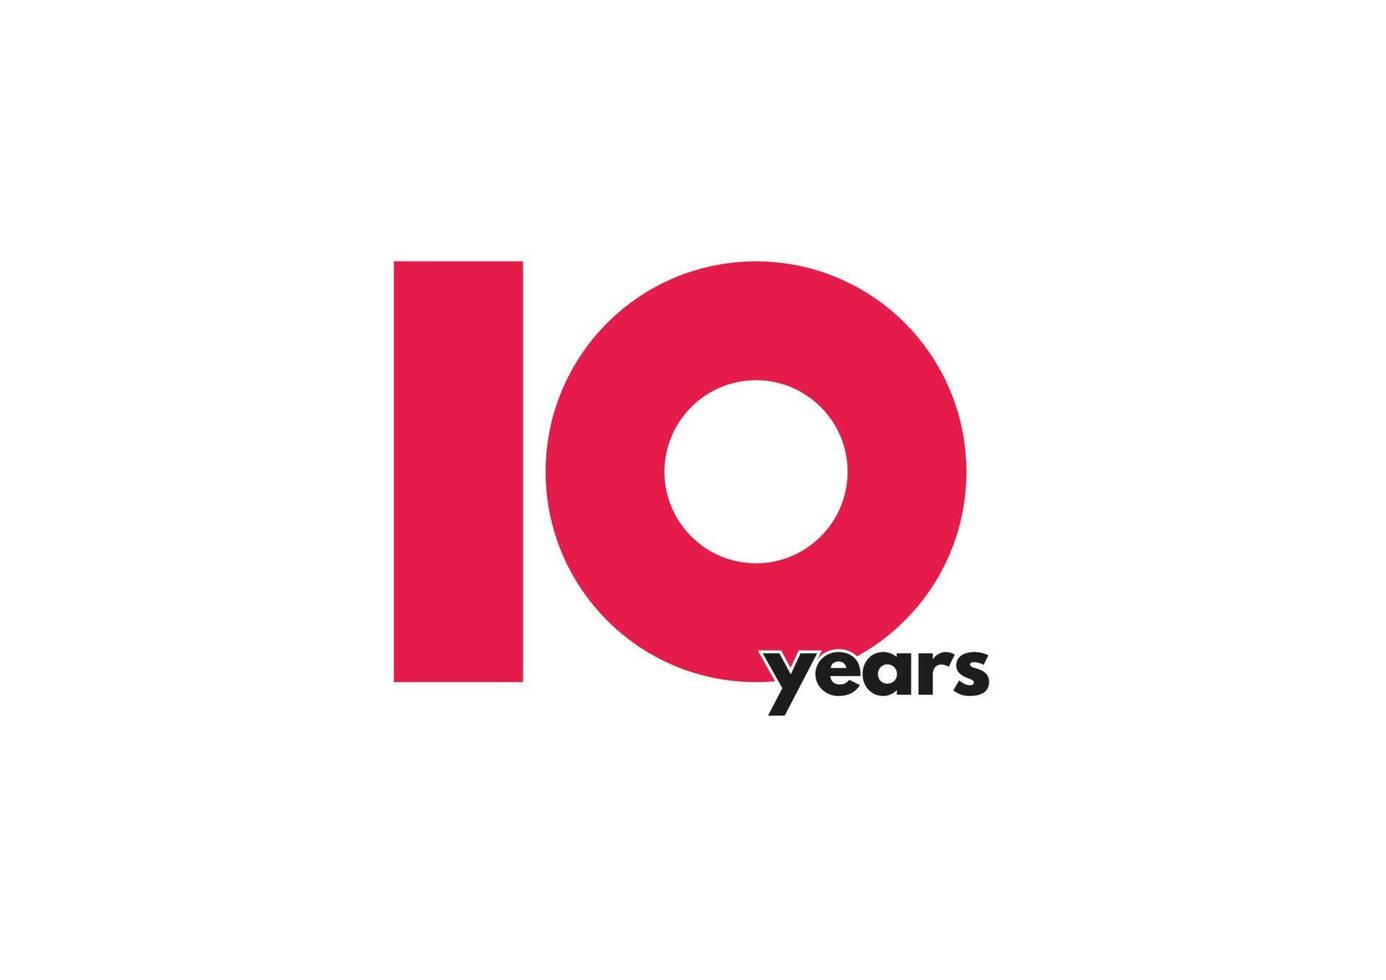 10º ano logotipo e tipografia vetor